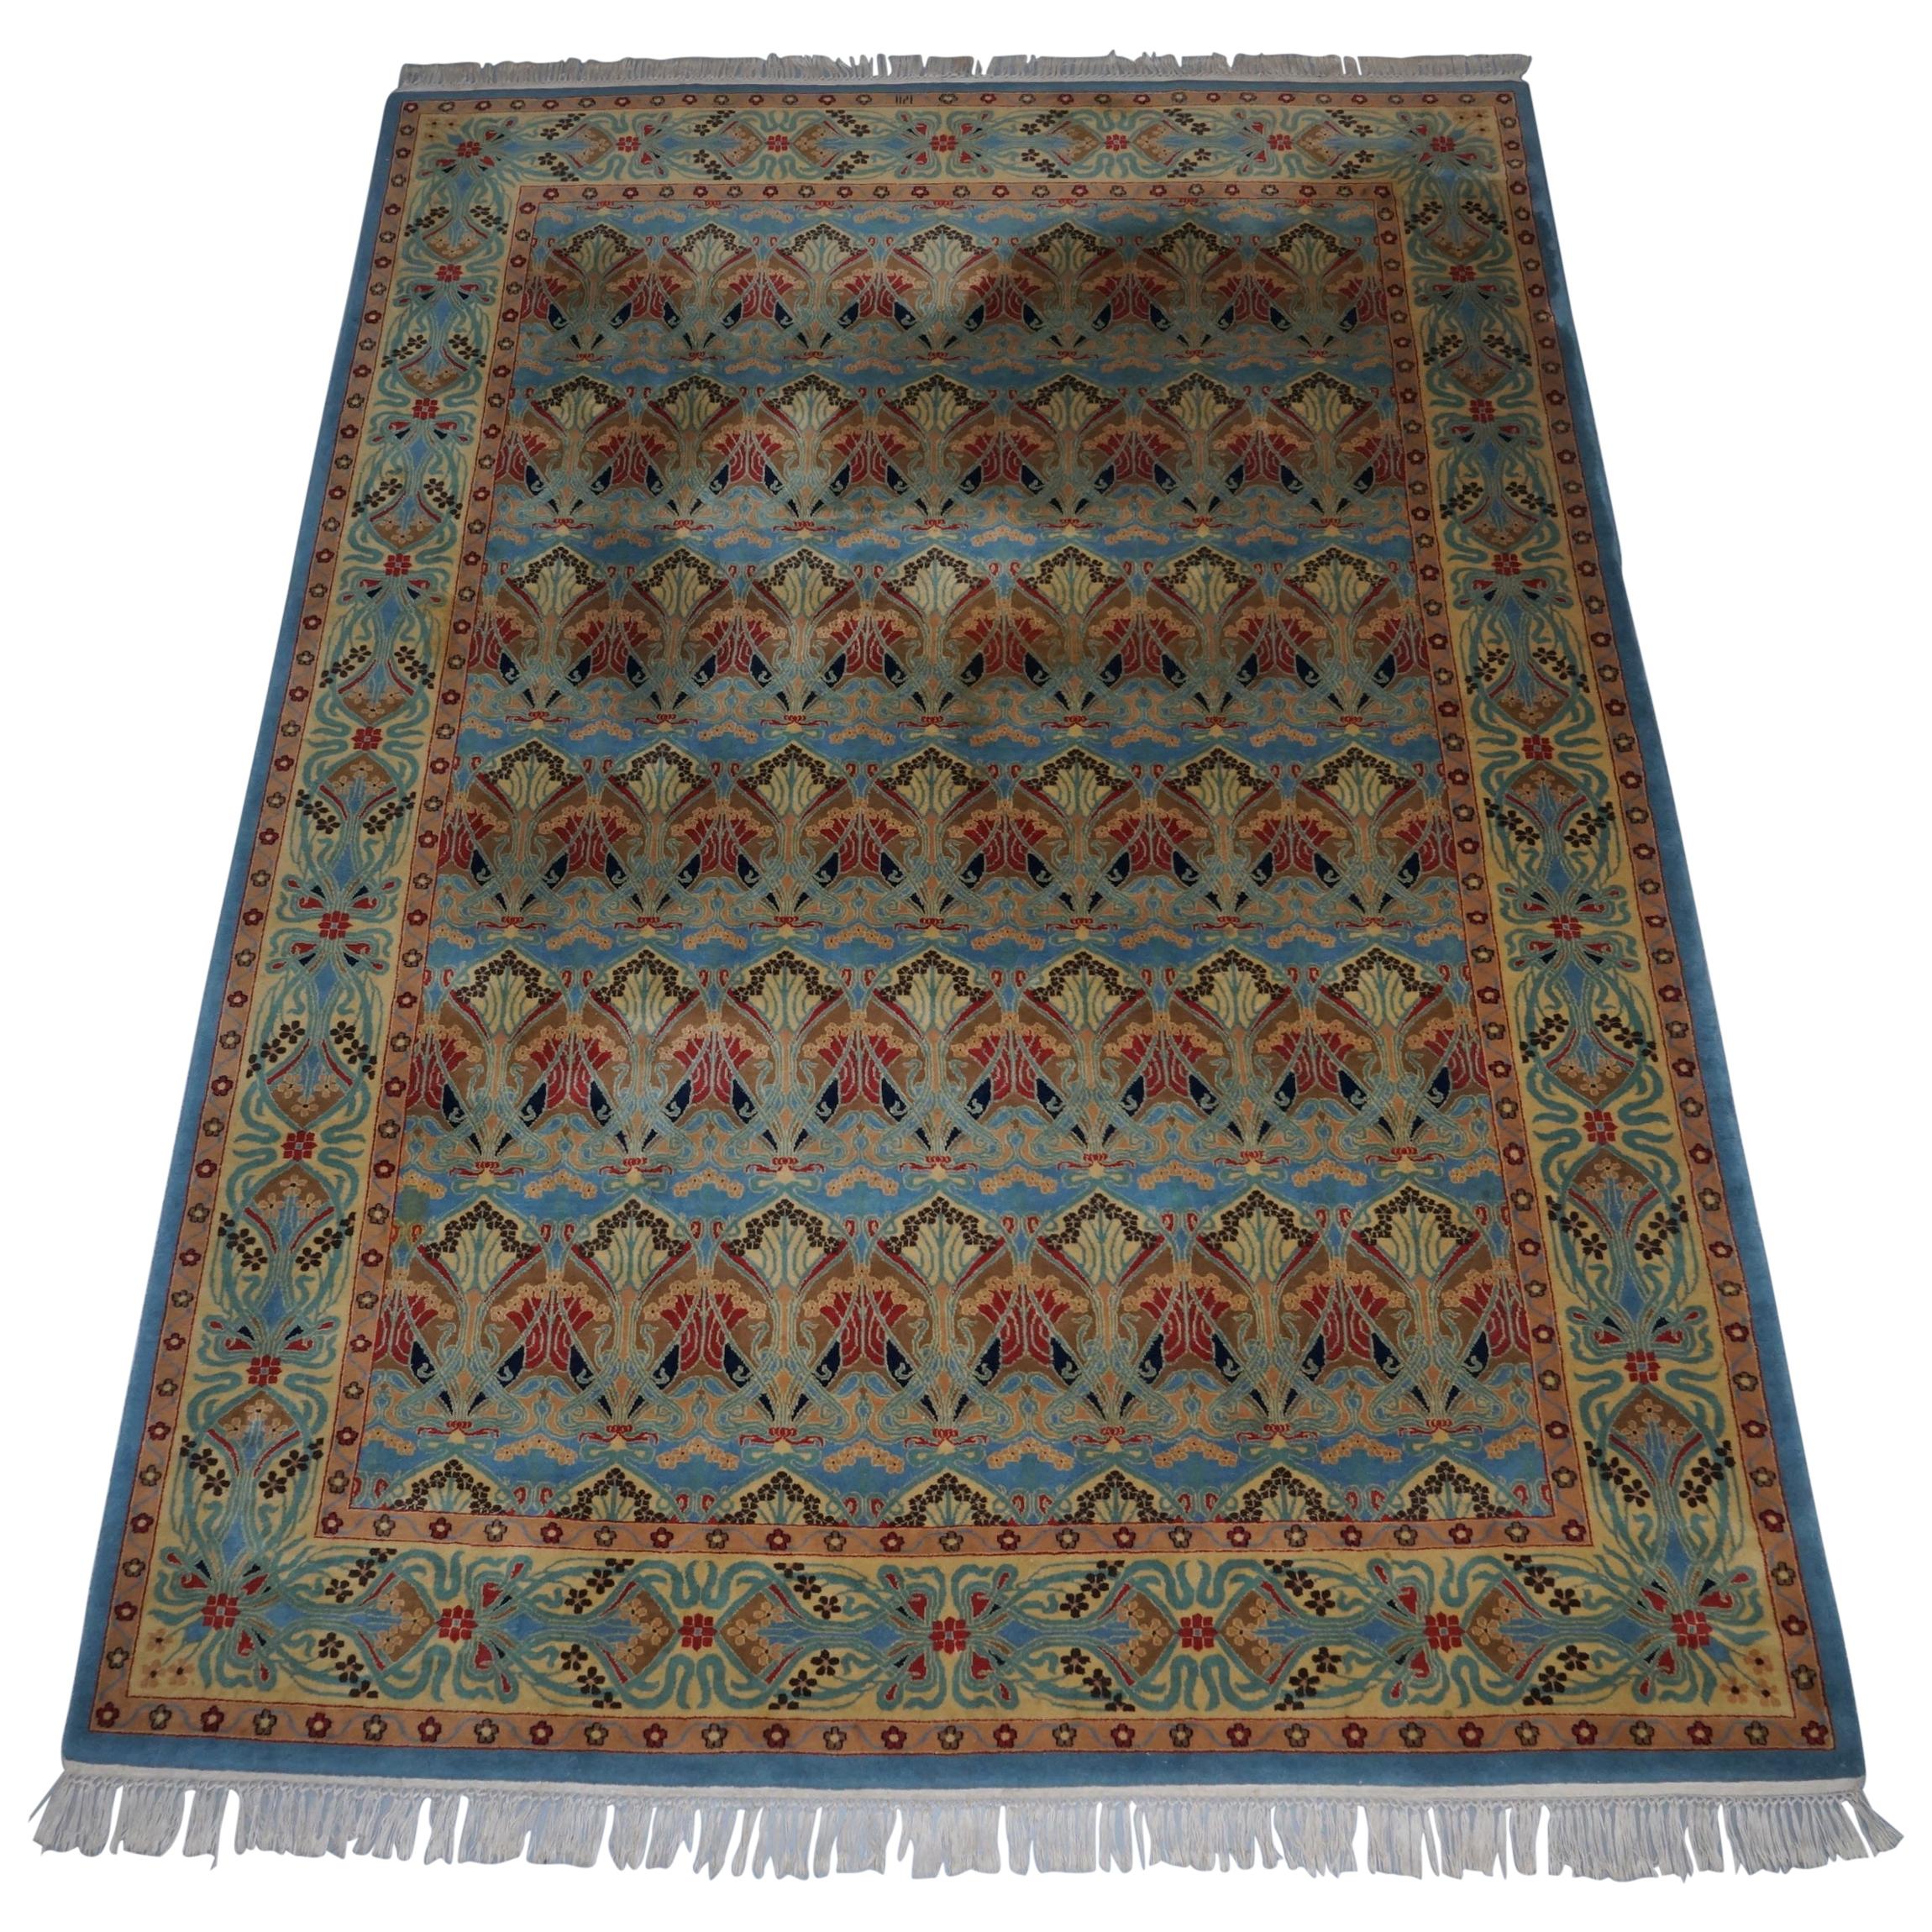 Vintage Liberty's London Ianthe Made in India 100% Wool Pile Kaimuri Rug Carpet